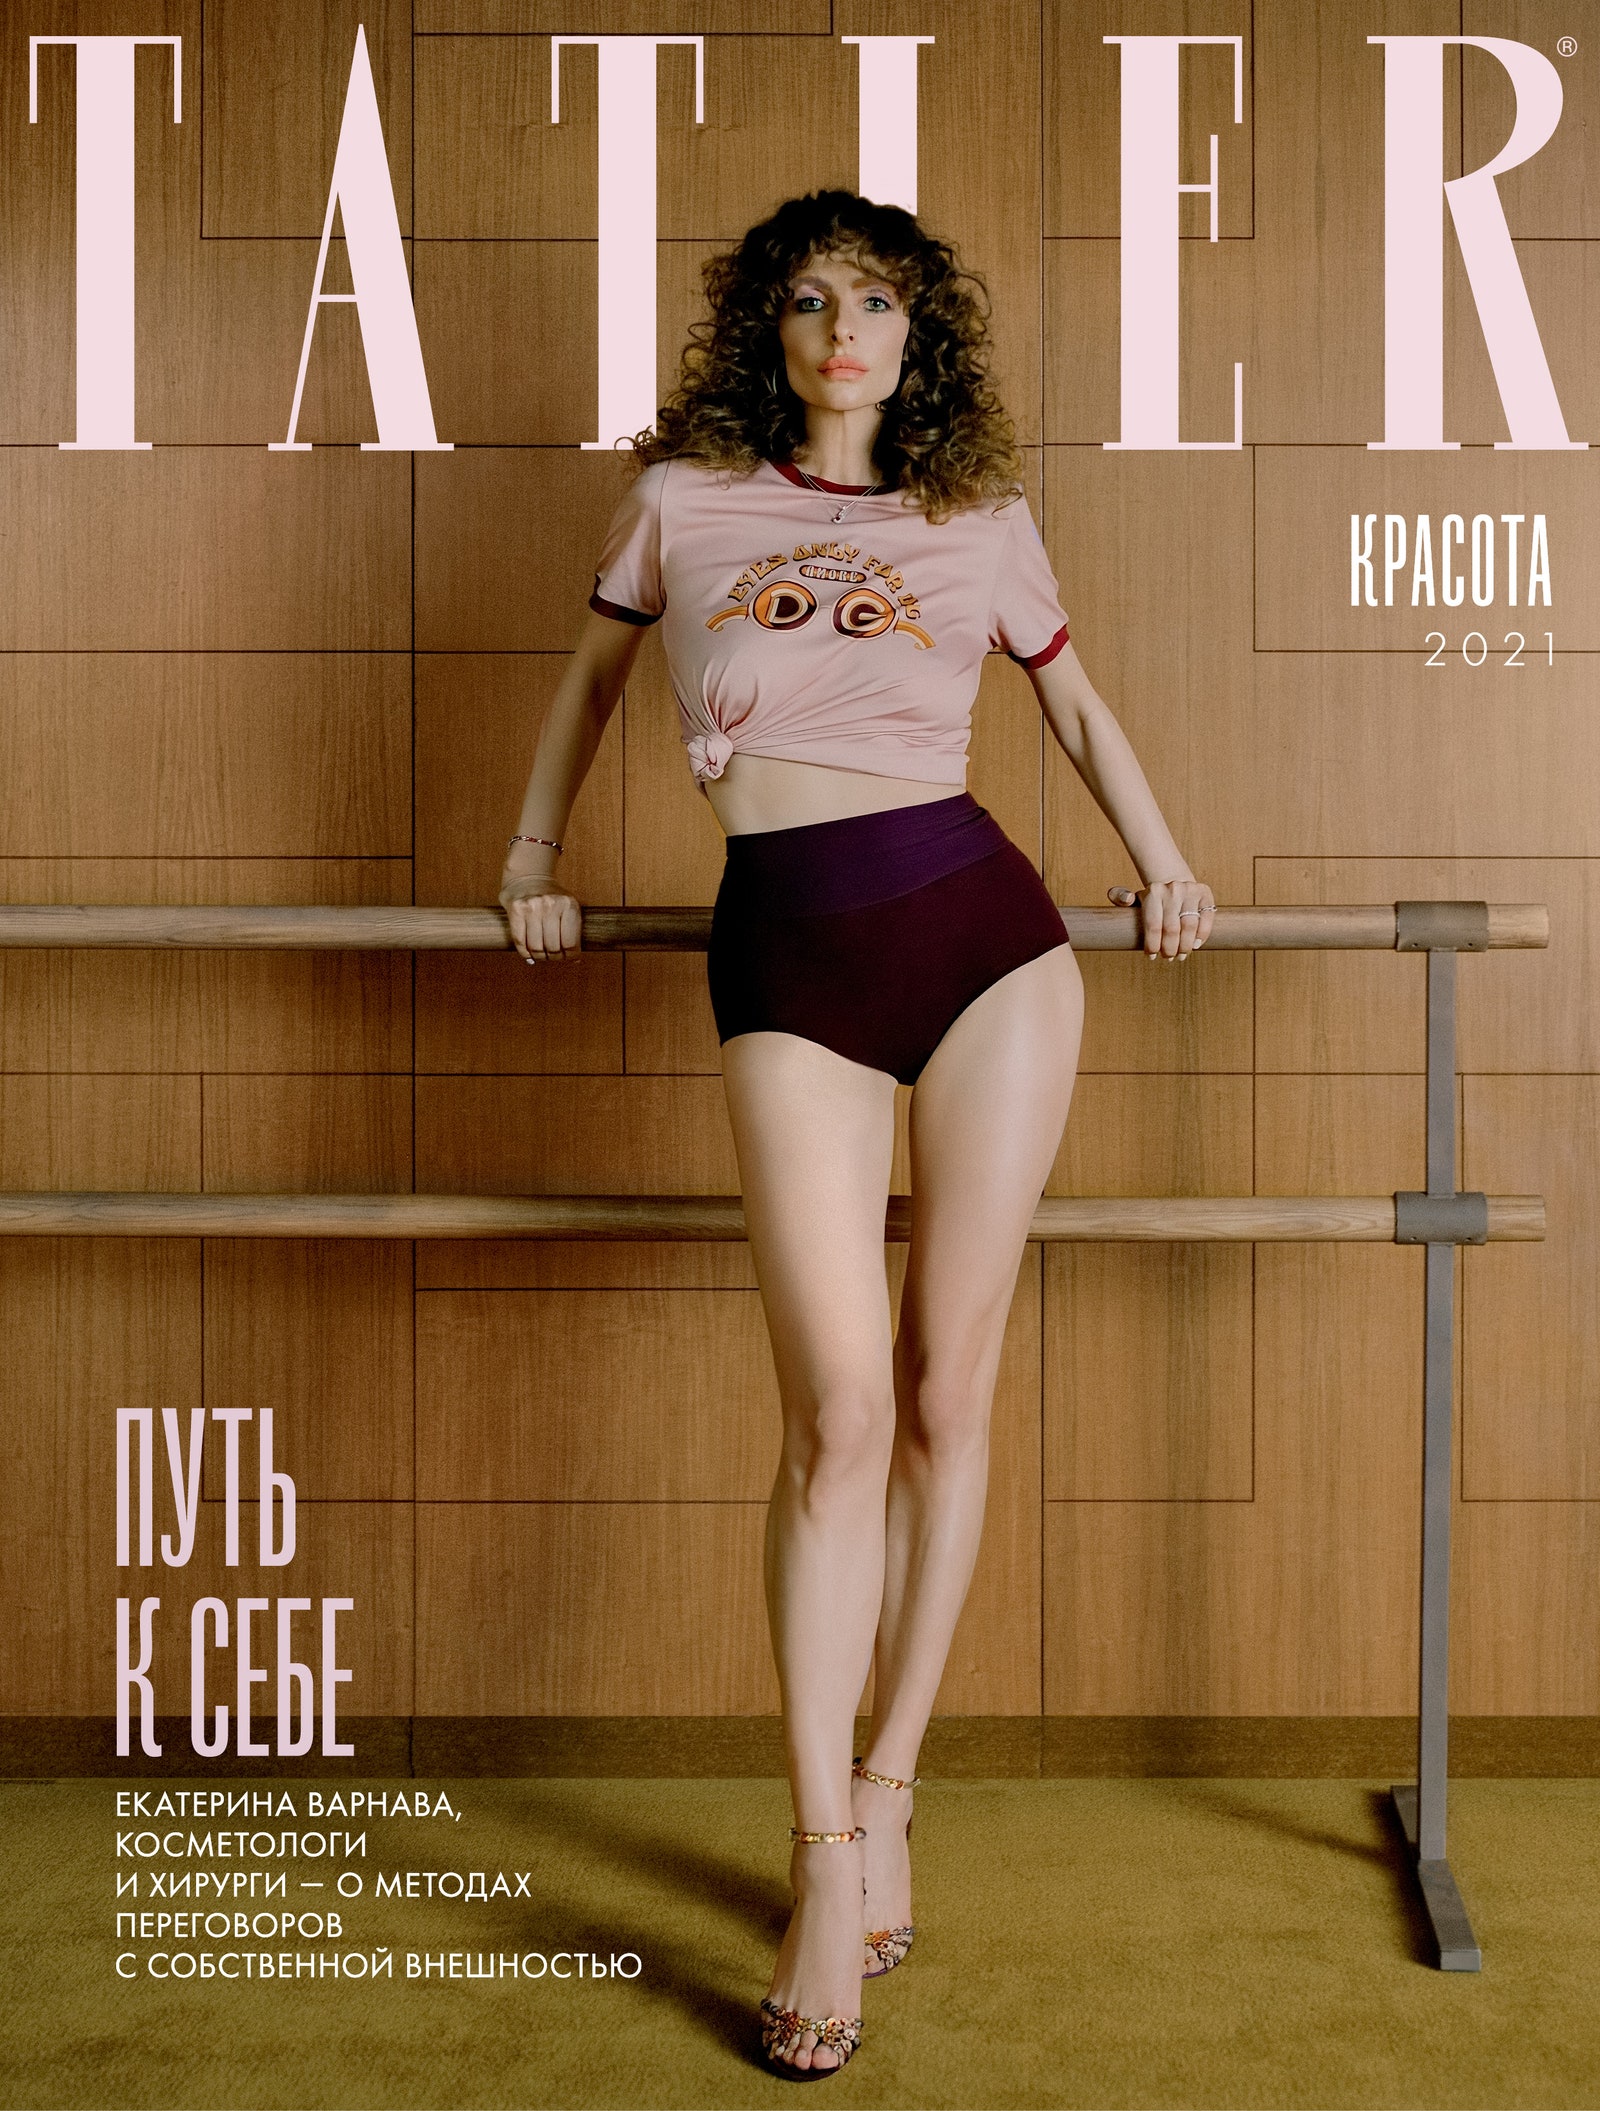 Екатерина Варнава на обложке beautyприложения Tatler